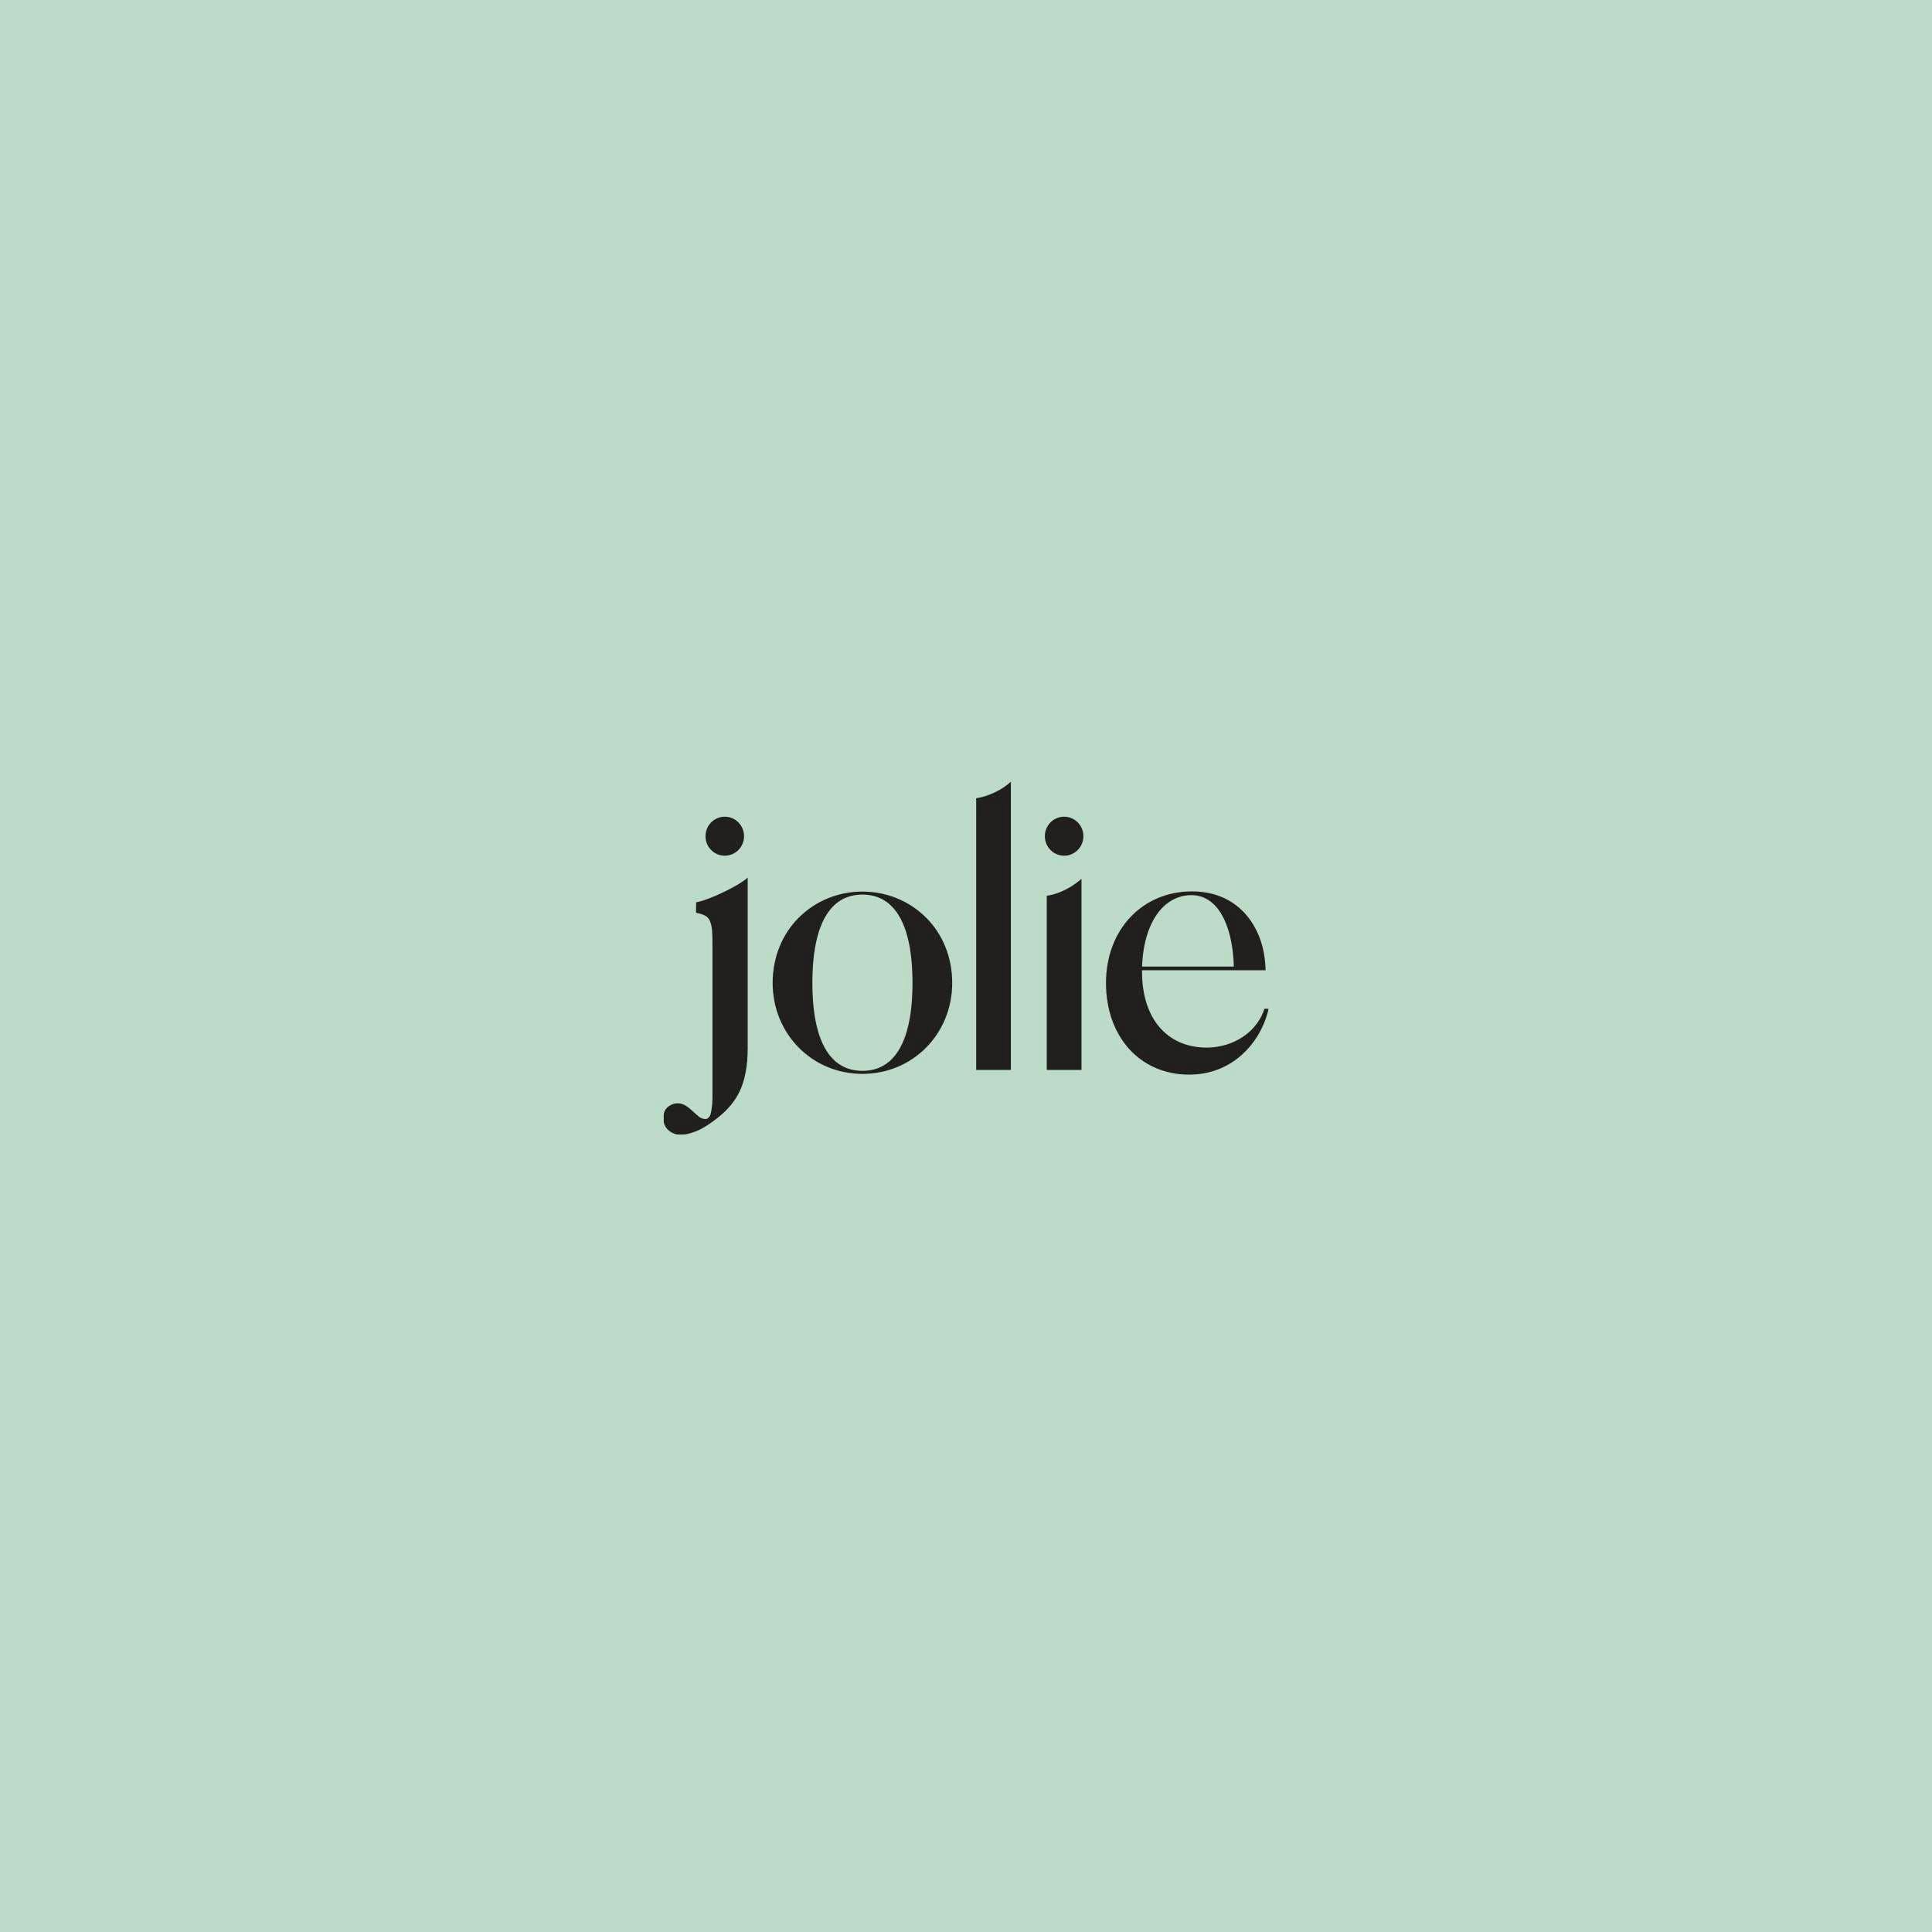 Jolie - Brand Identity, Brand Messaging, Website Design, Illustration, and Packaging Design